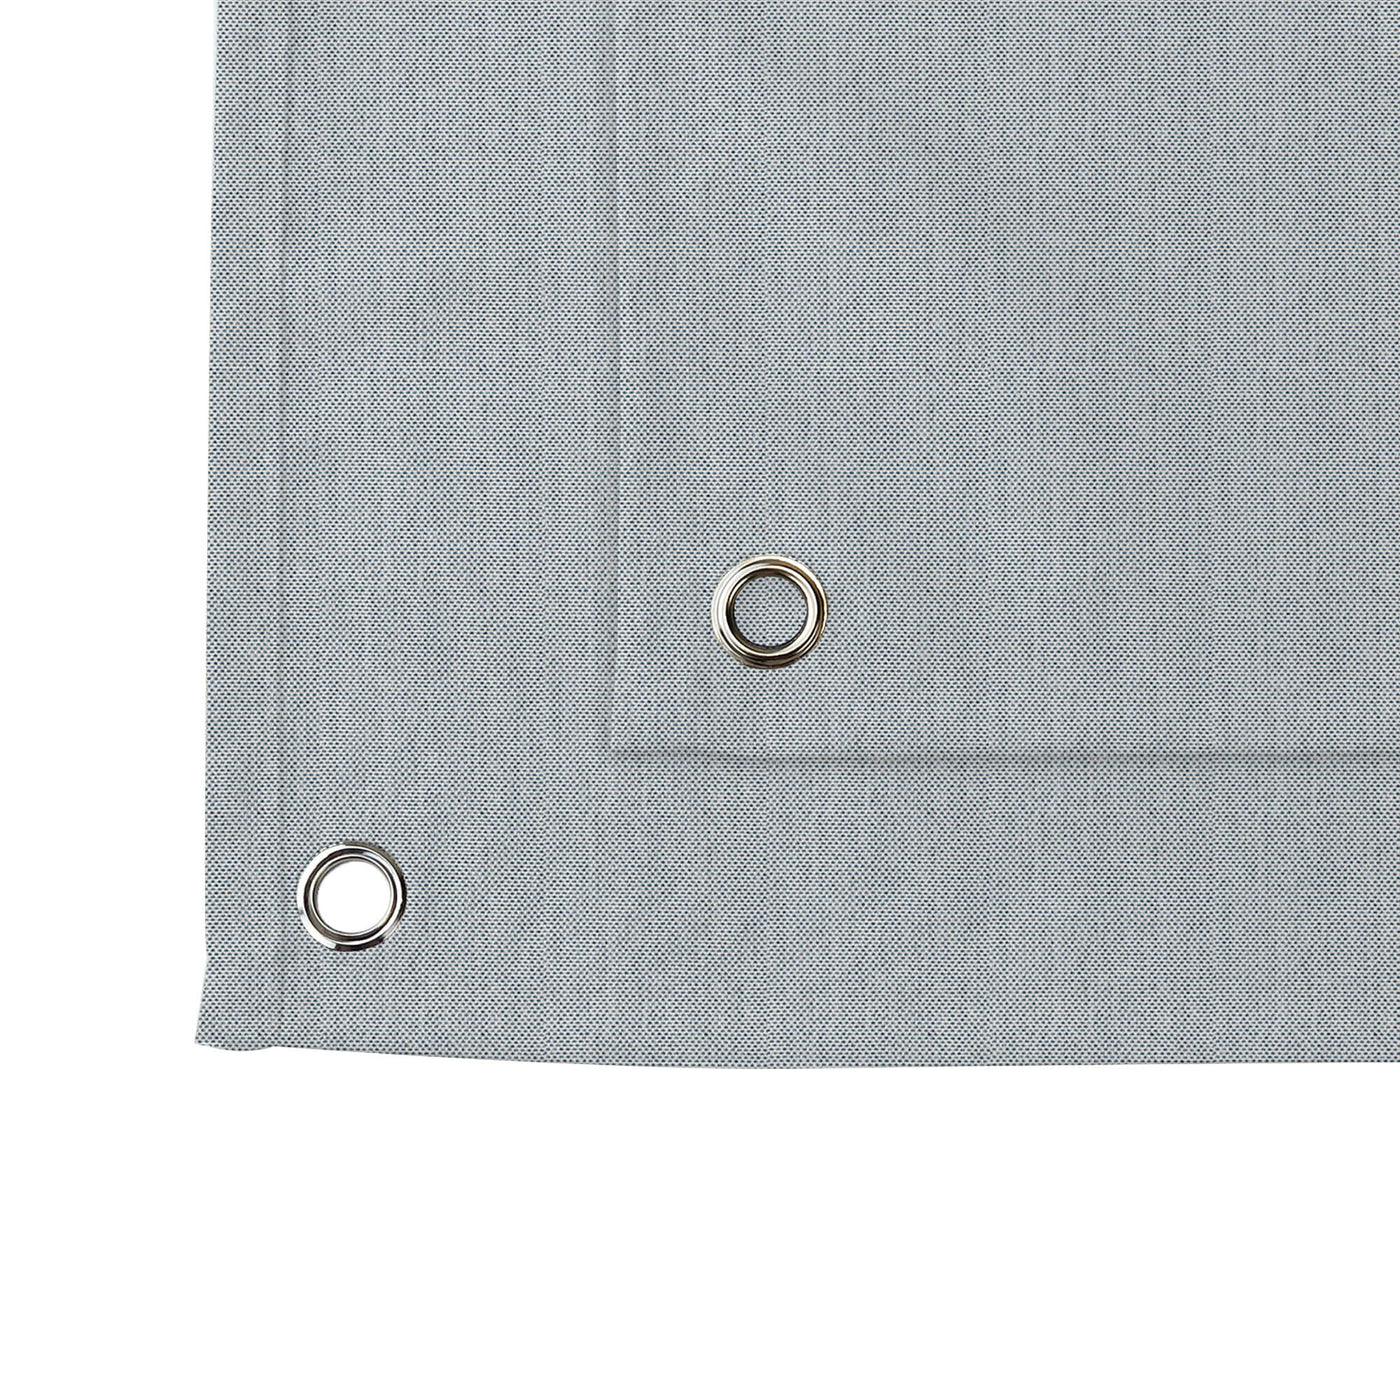 PENGI Outdoor Curtains Waterproof - Sailcloth Misty Gray